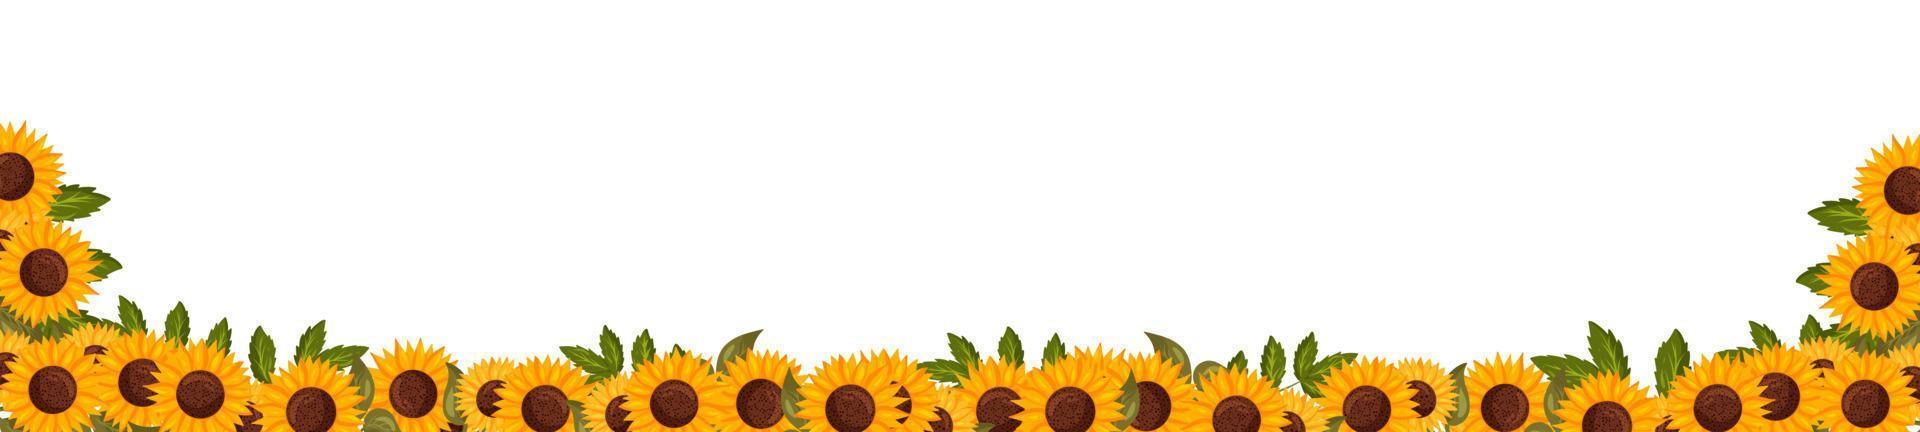 Spring horizontal frame with sunflower flowers. Summer vector banner